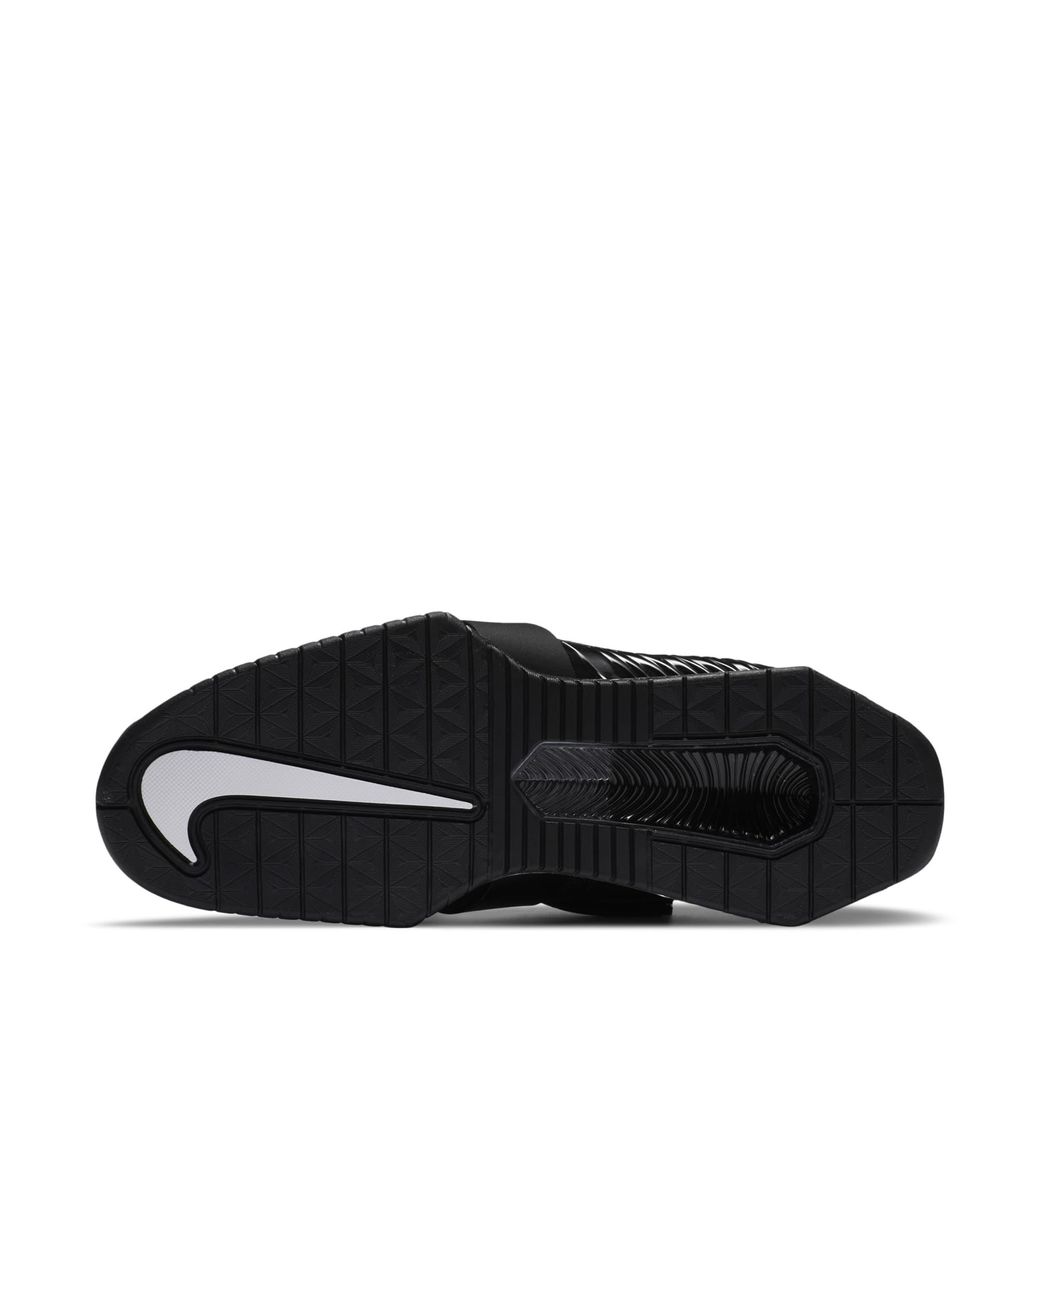 Nike Romaleos 4 Training Shoe Black | Lyst Australia